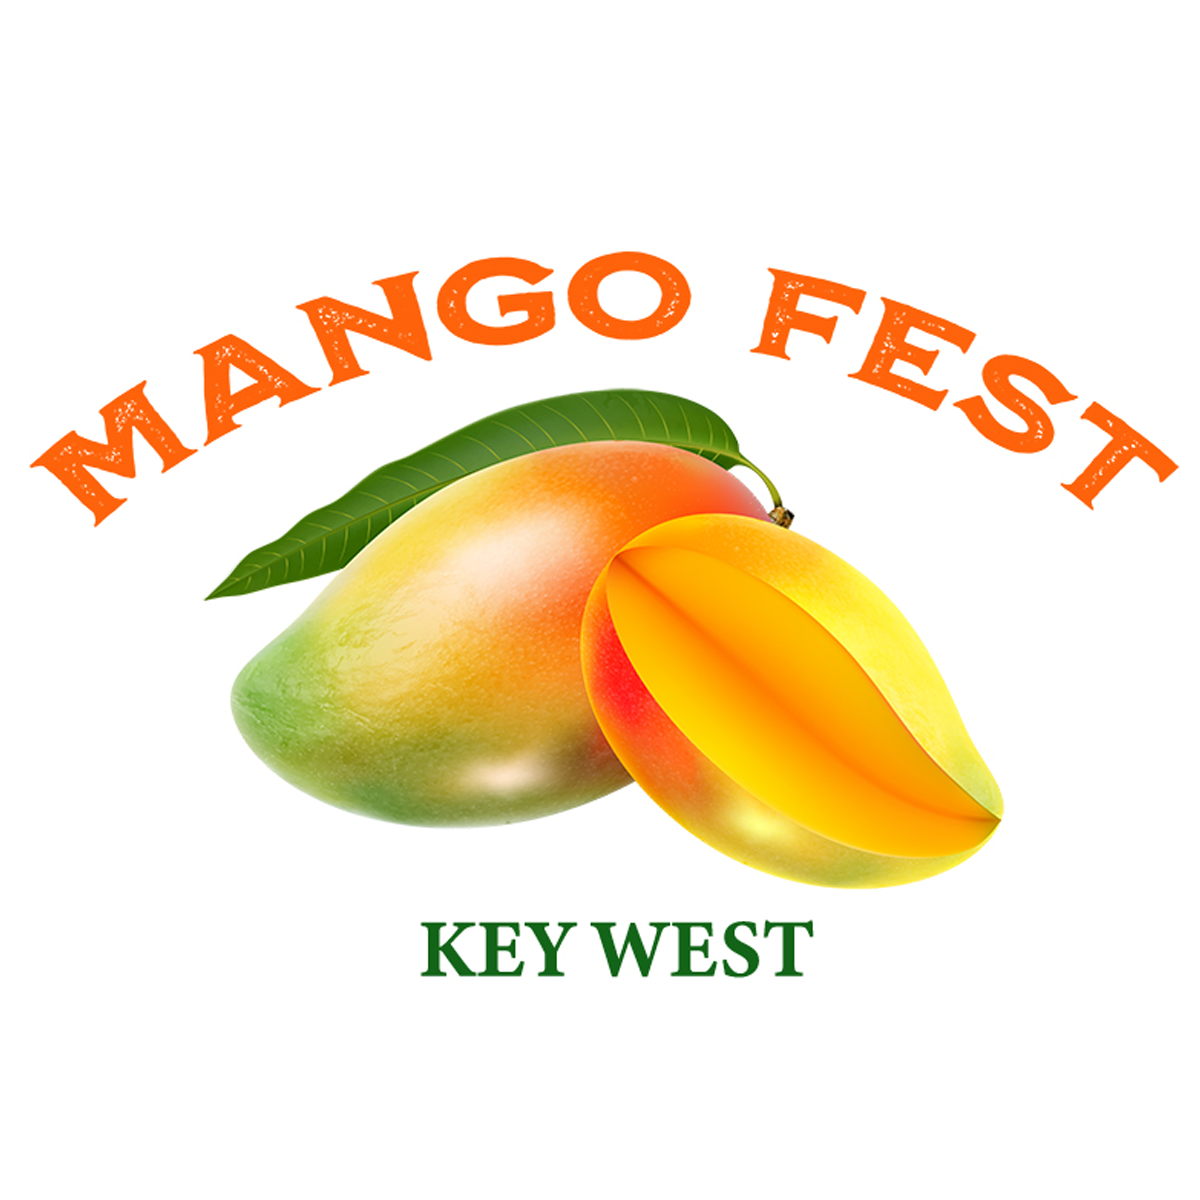 MangoFest